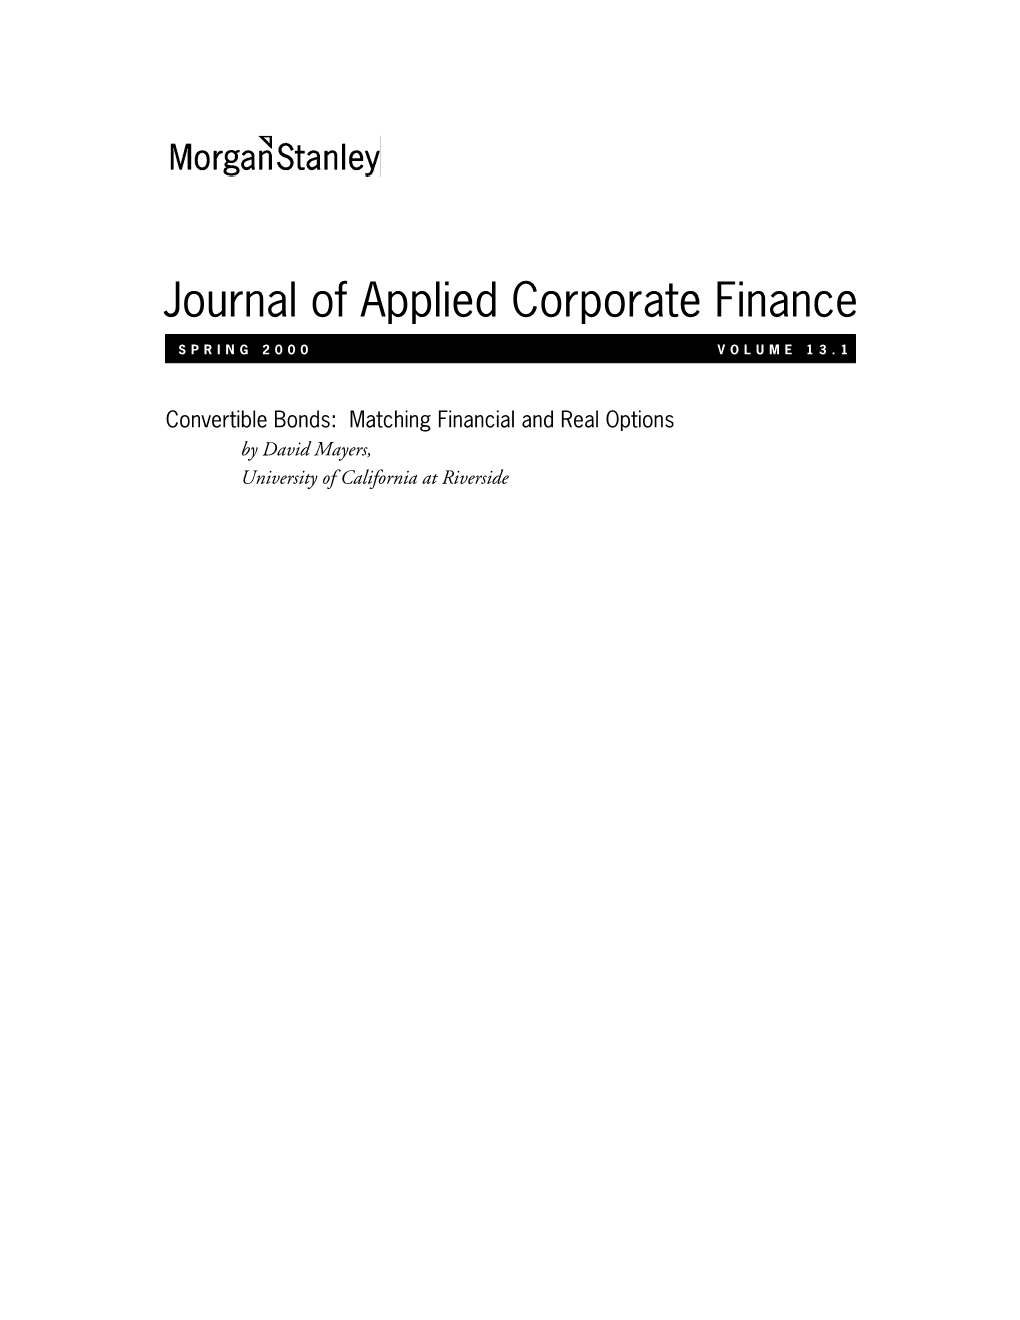 Convertible Bonds: Matching Financial and Real Options by David Mayers, University of California at Riverside